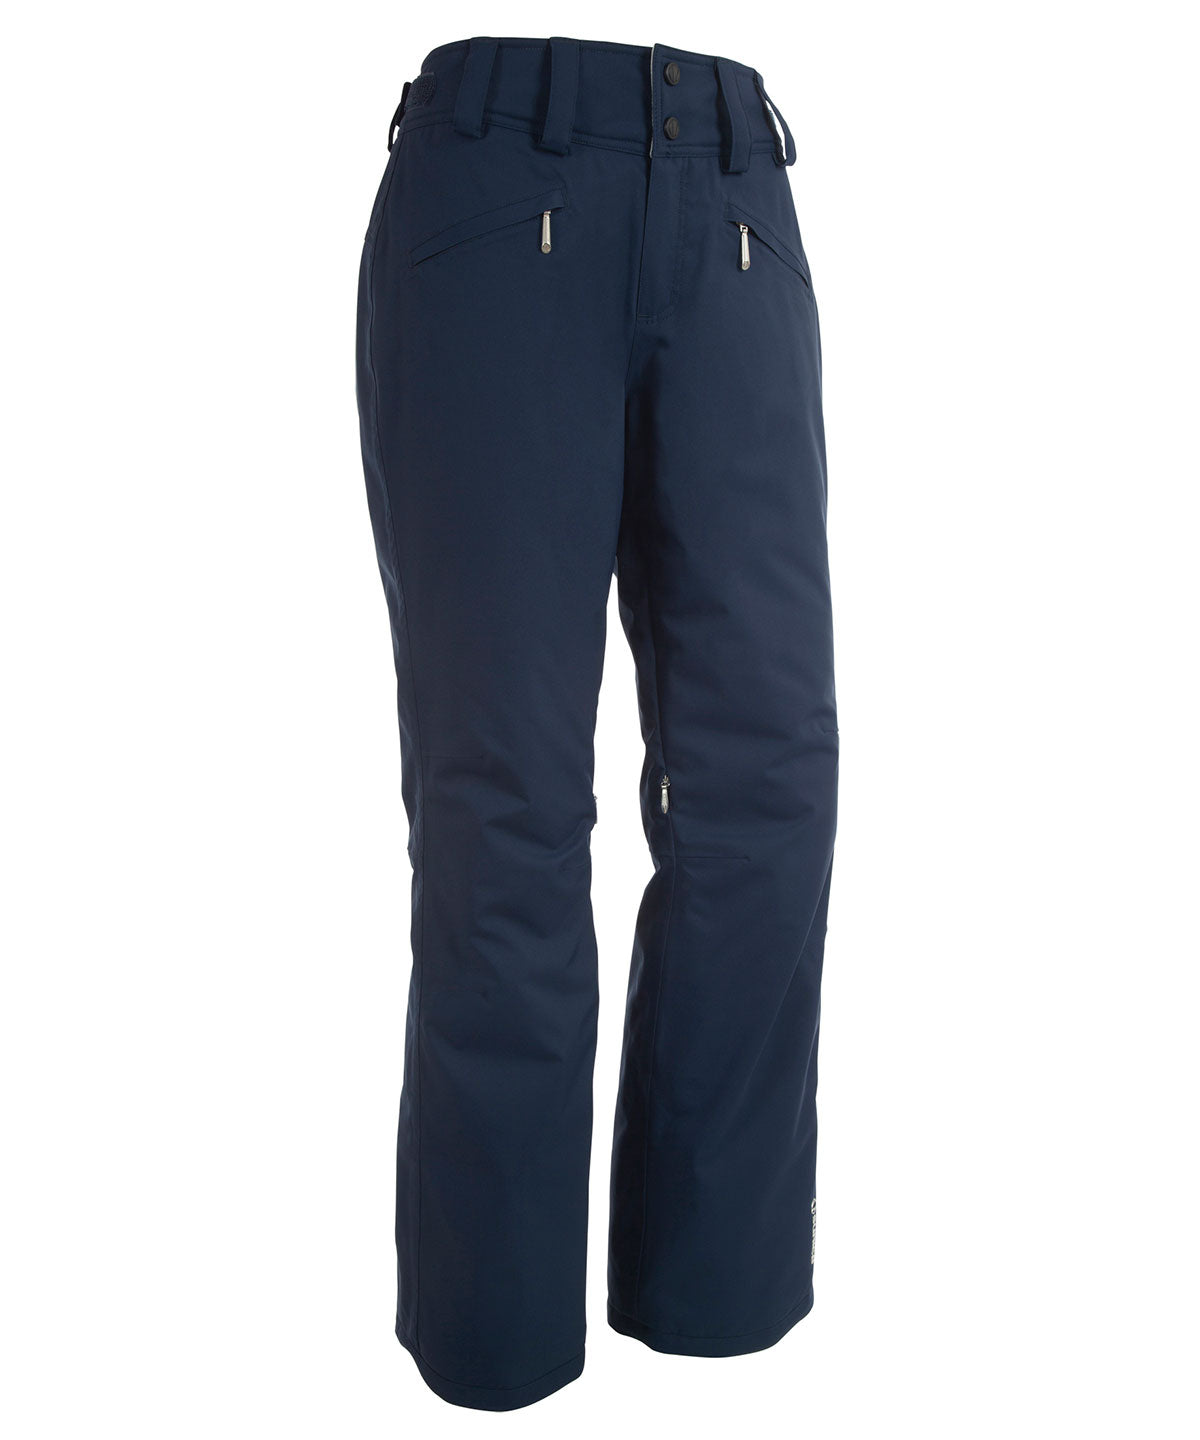 XFLWAM Women's Ski Snow Pants Waterproof Wind Lightweight Thermal Pants  Outdoor Hiking Mountain Softshell with Belt Blue M 